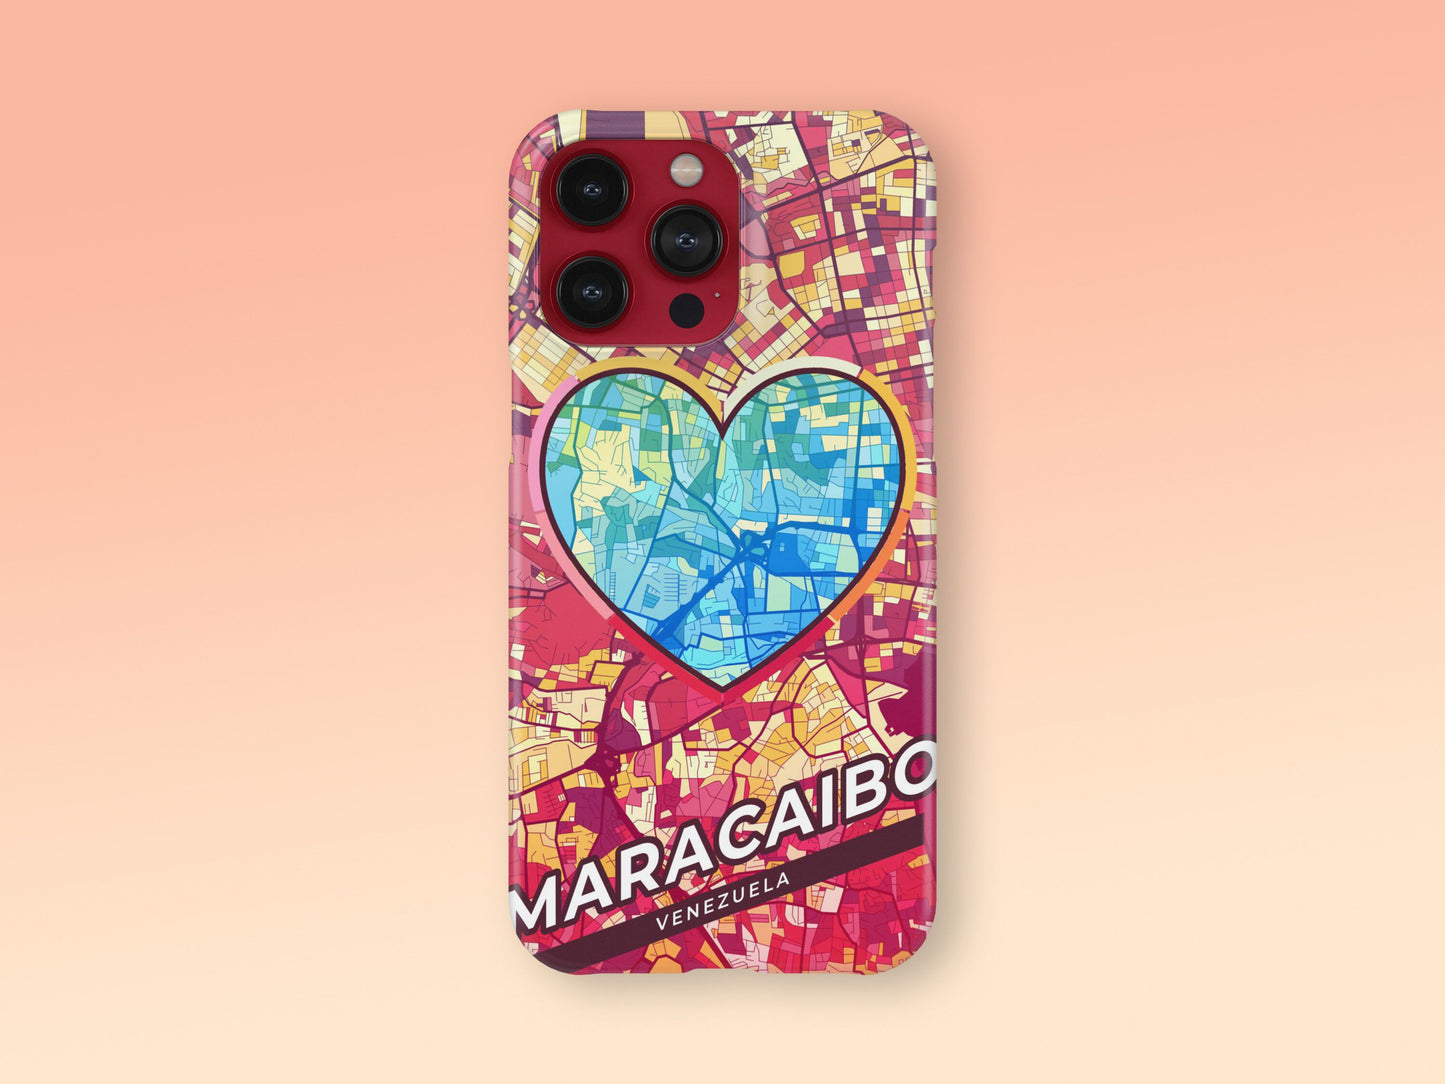 Maracaibo Venezuela slim phone case with colorful icon. Birthday, wedding or housewarming gift. Couple match cases. 2